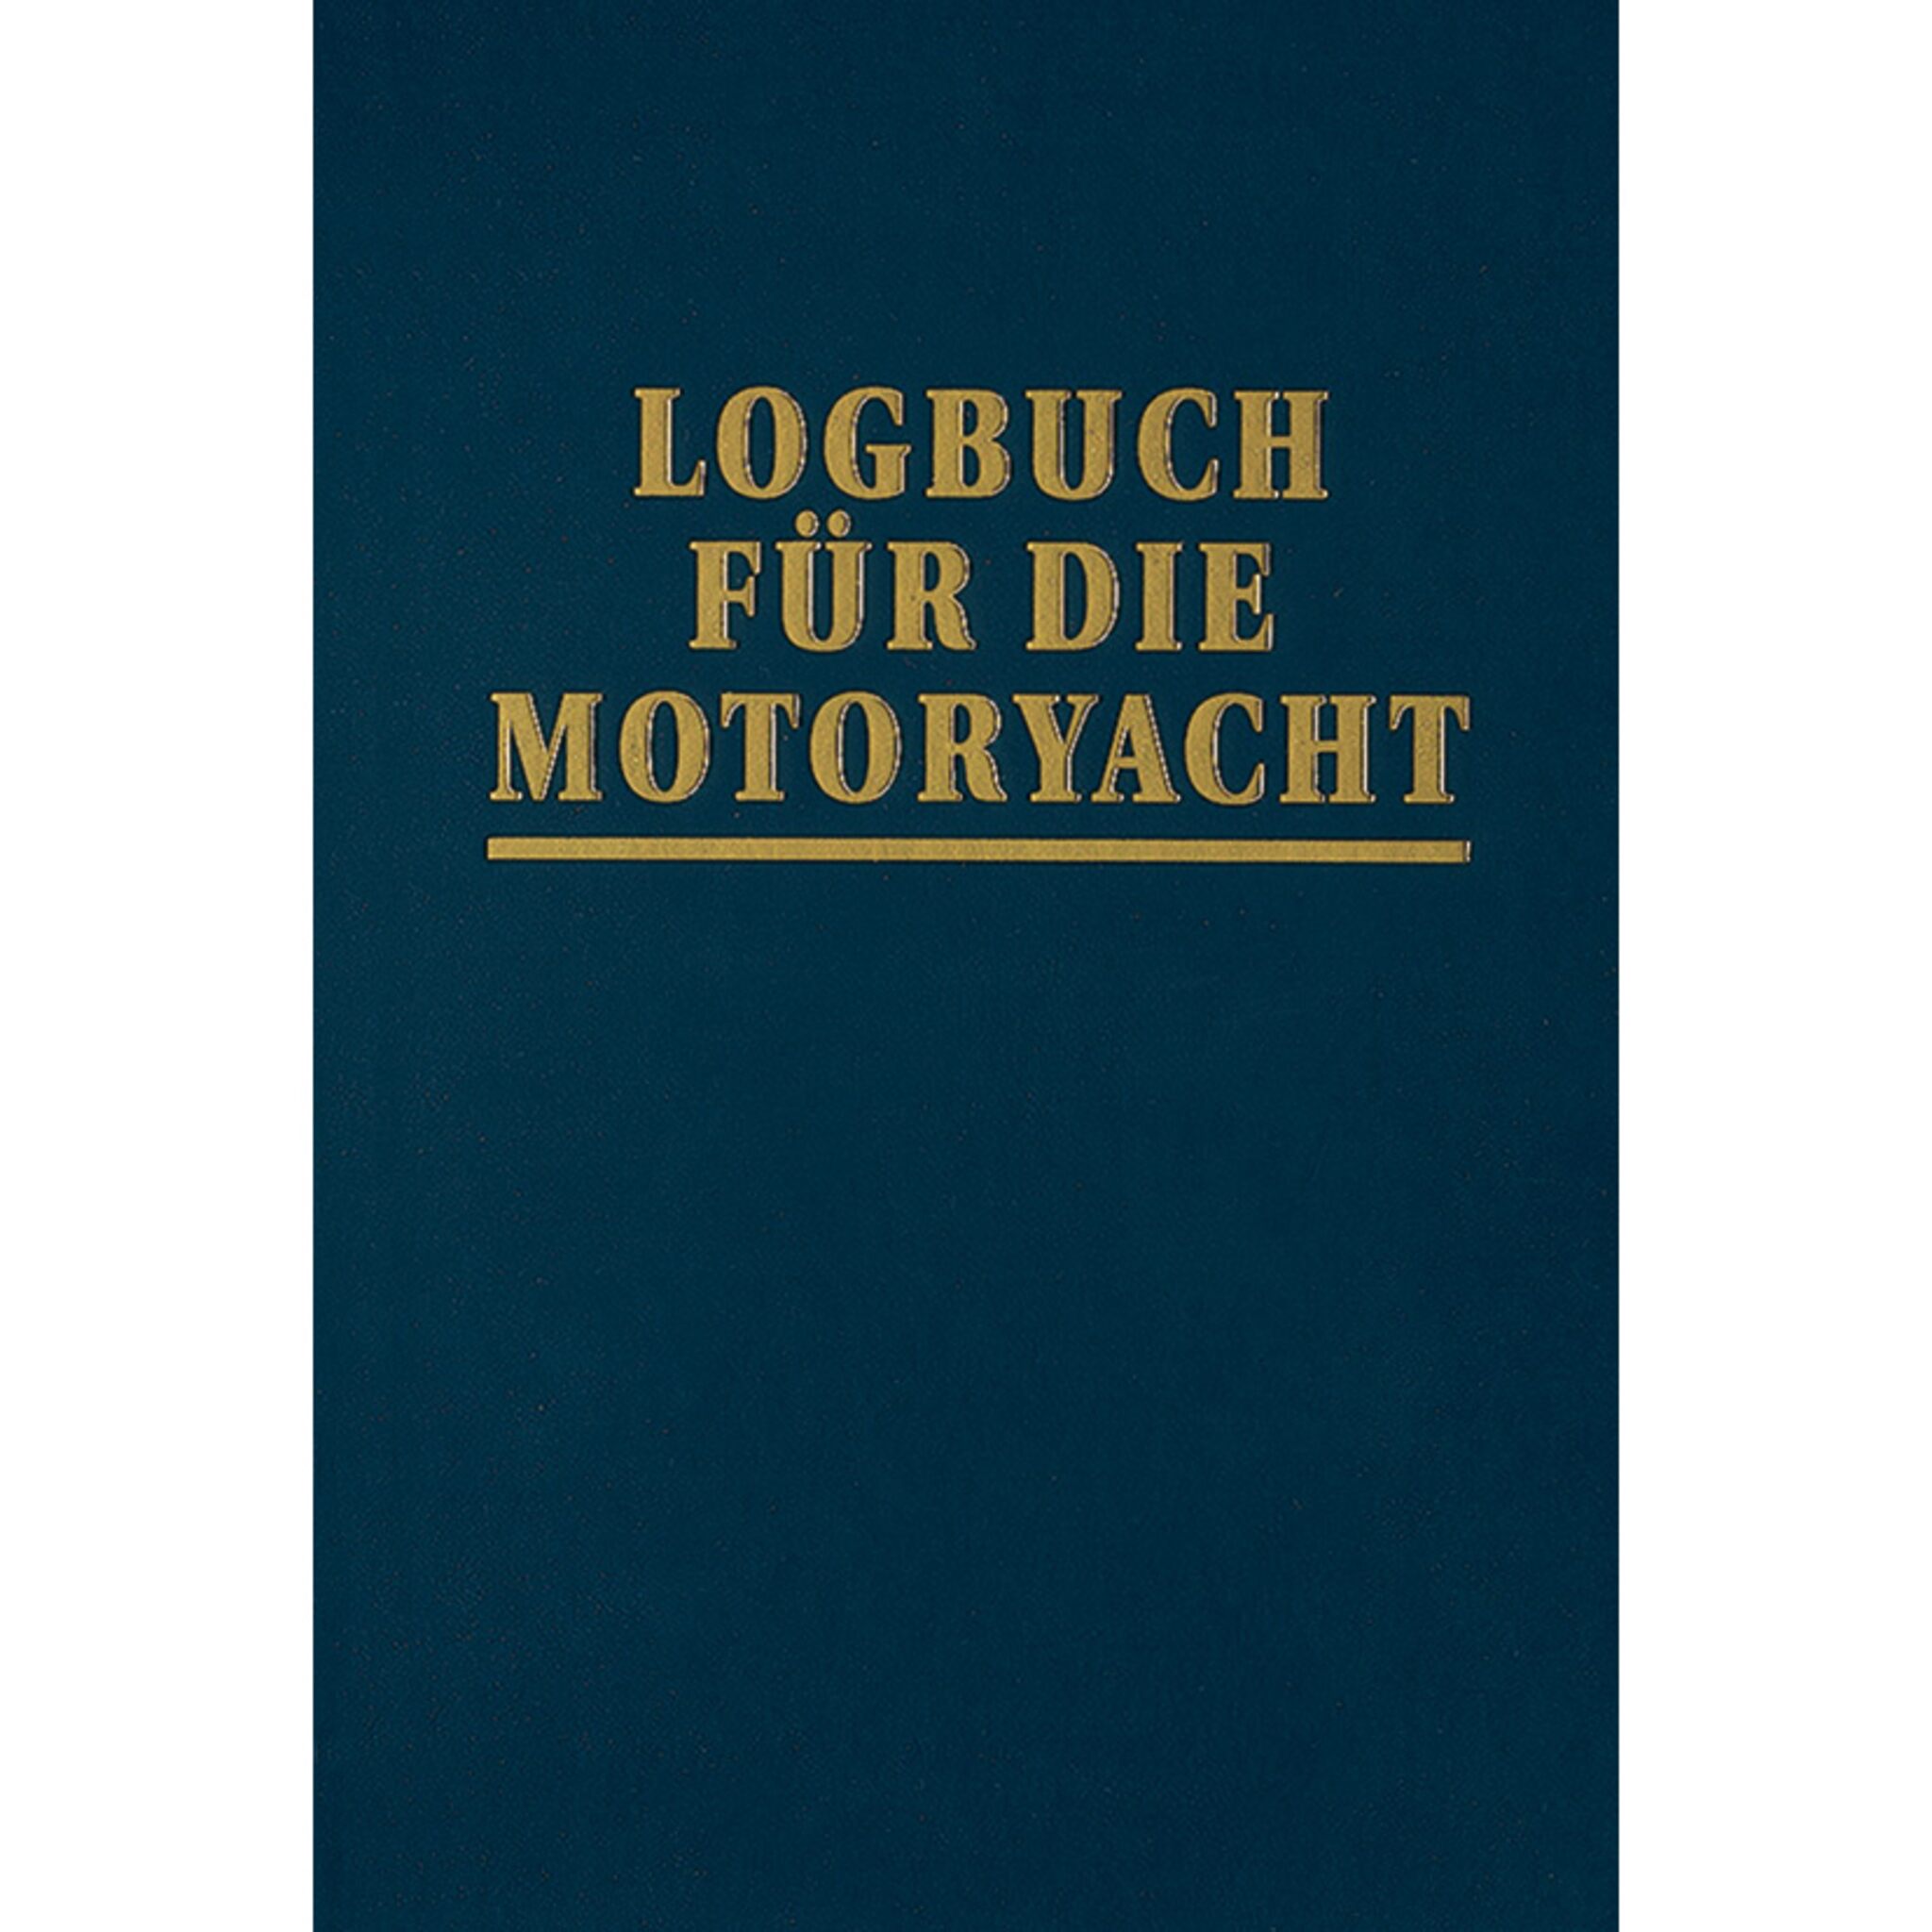 Delius Klasing logbook for the motor yacht